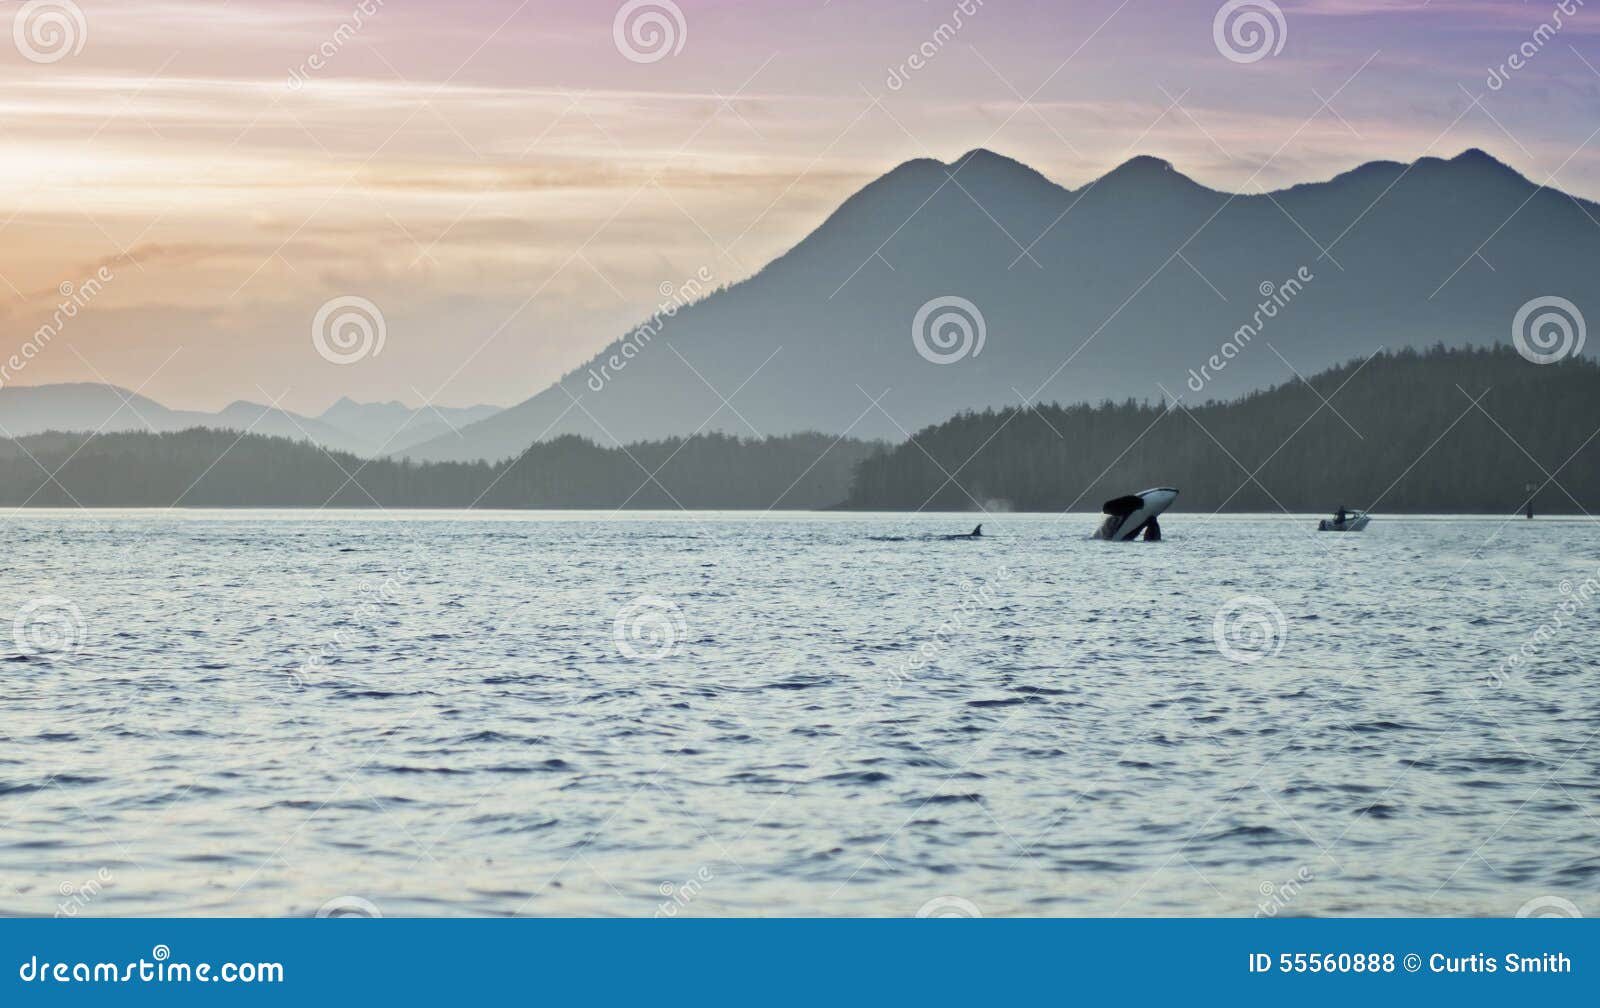 wild orcas breach swim with sunset mountains tofino british columbia